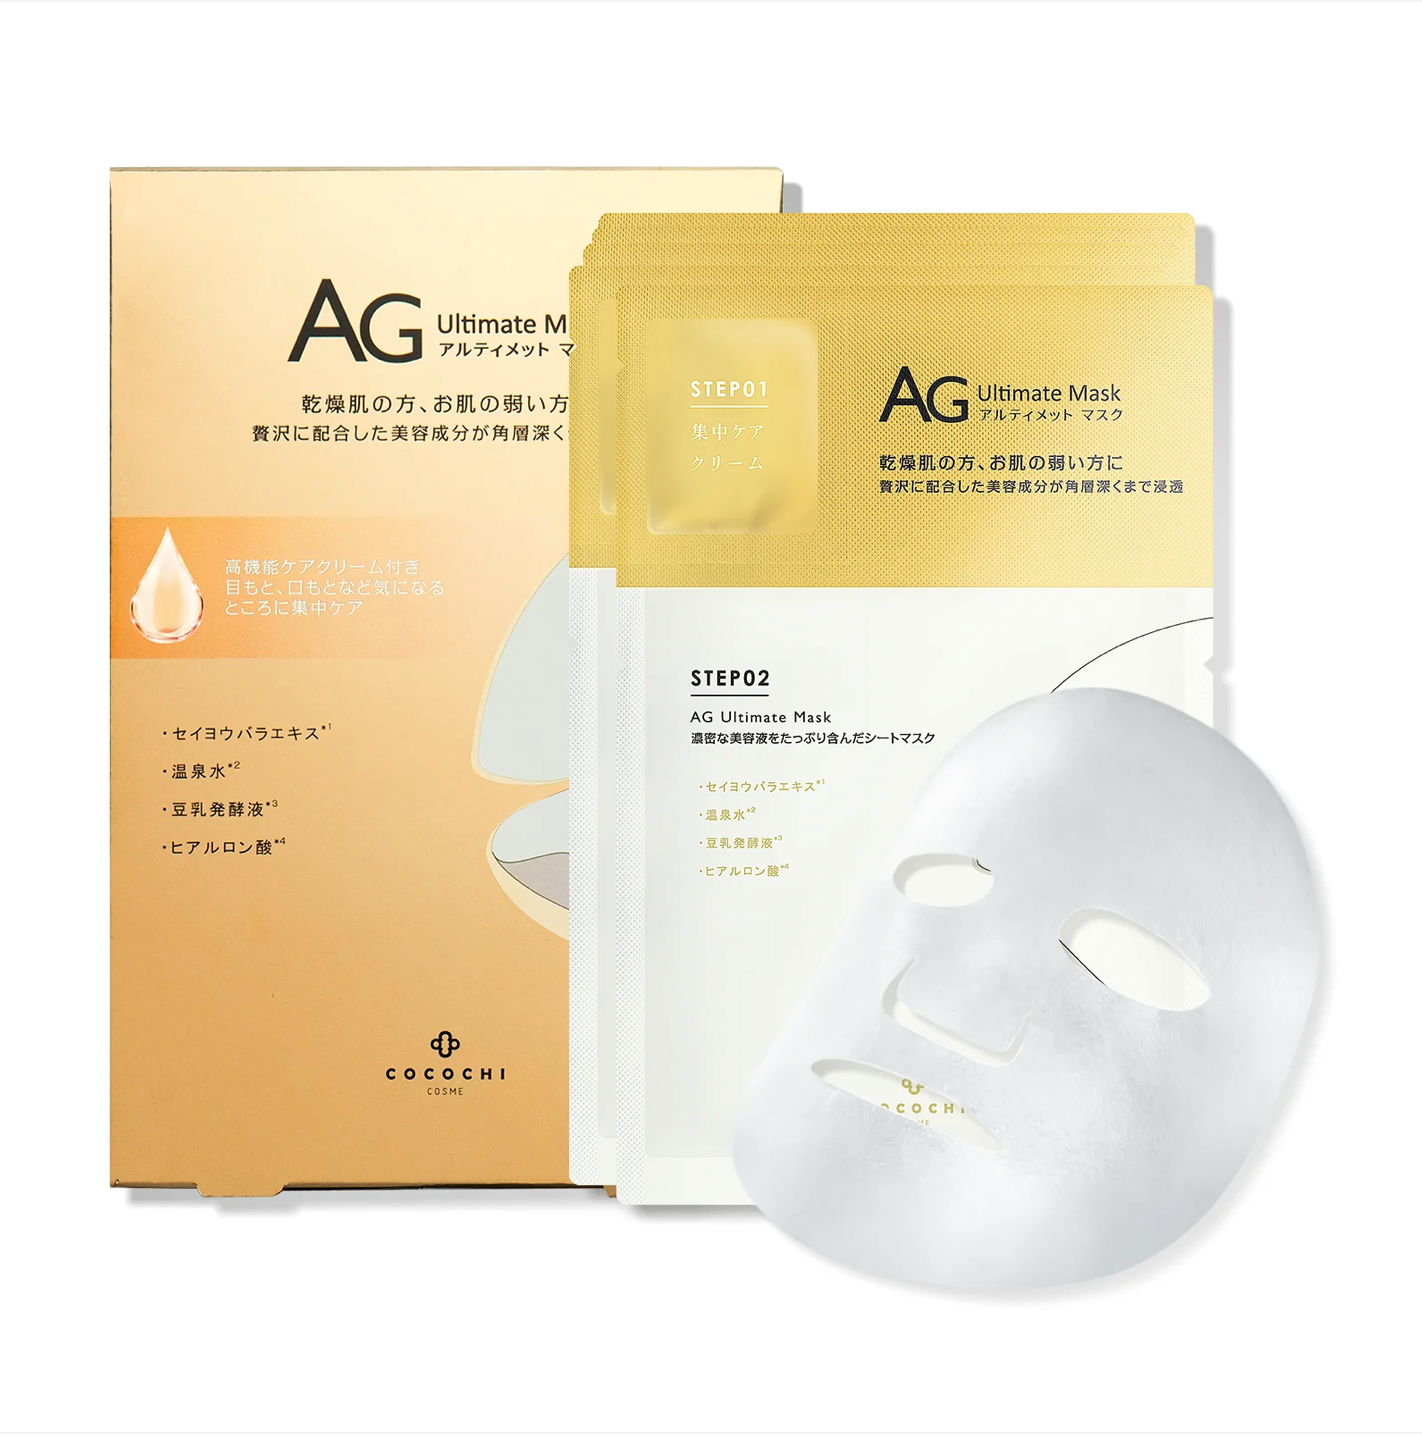 COCOCHI AG Ultimate Facial Mask (Gold) - 5 pcs